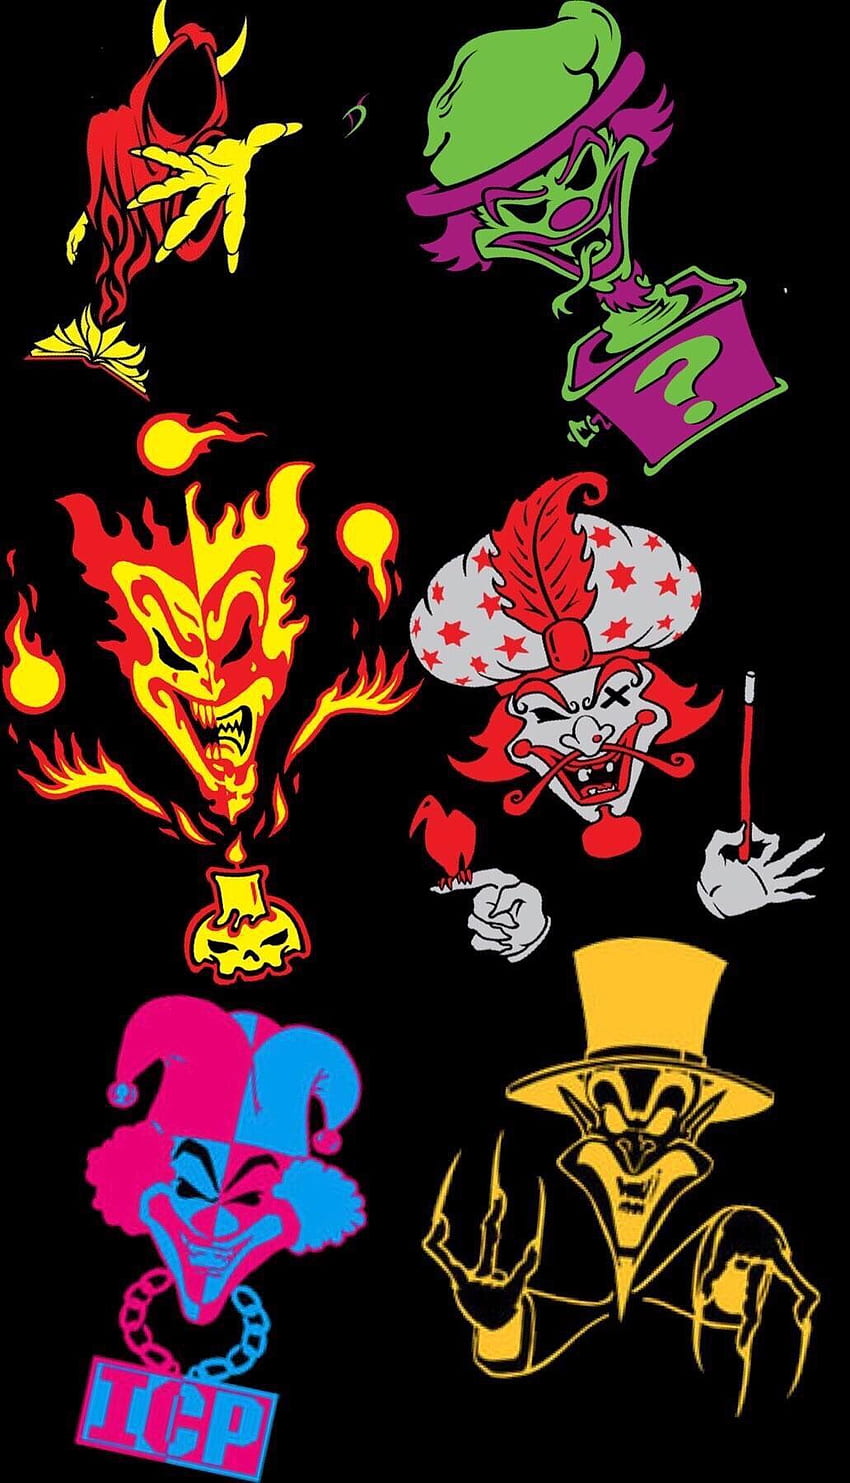 insane clown posse logo wallpaper